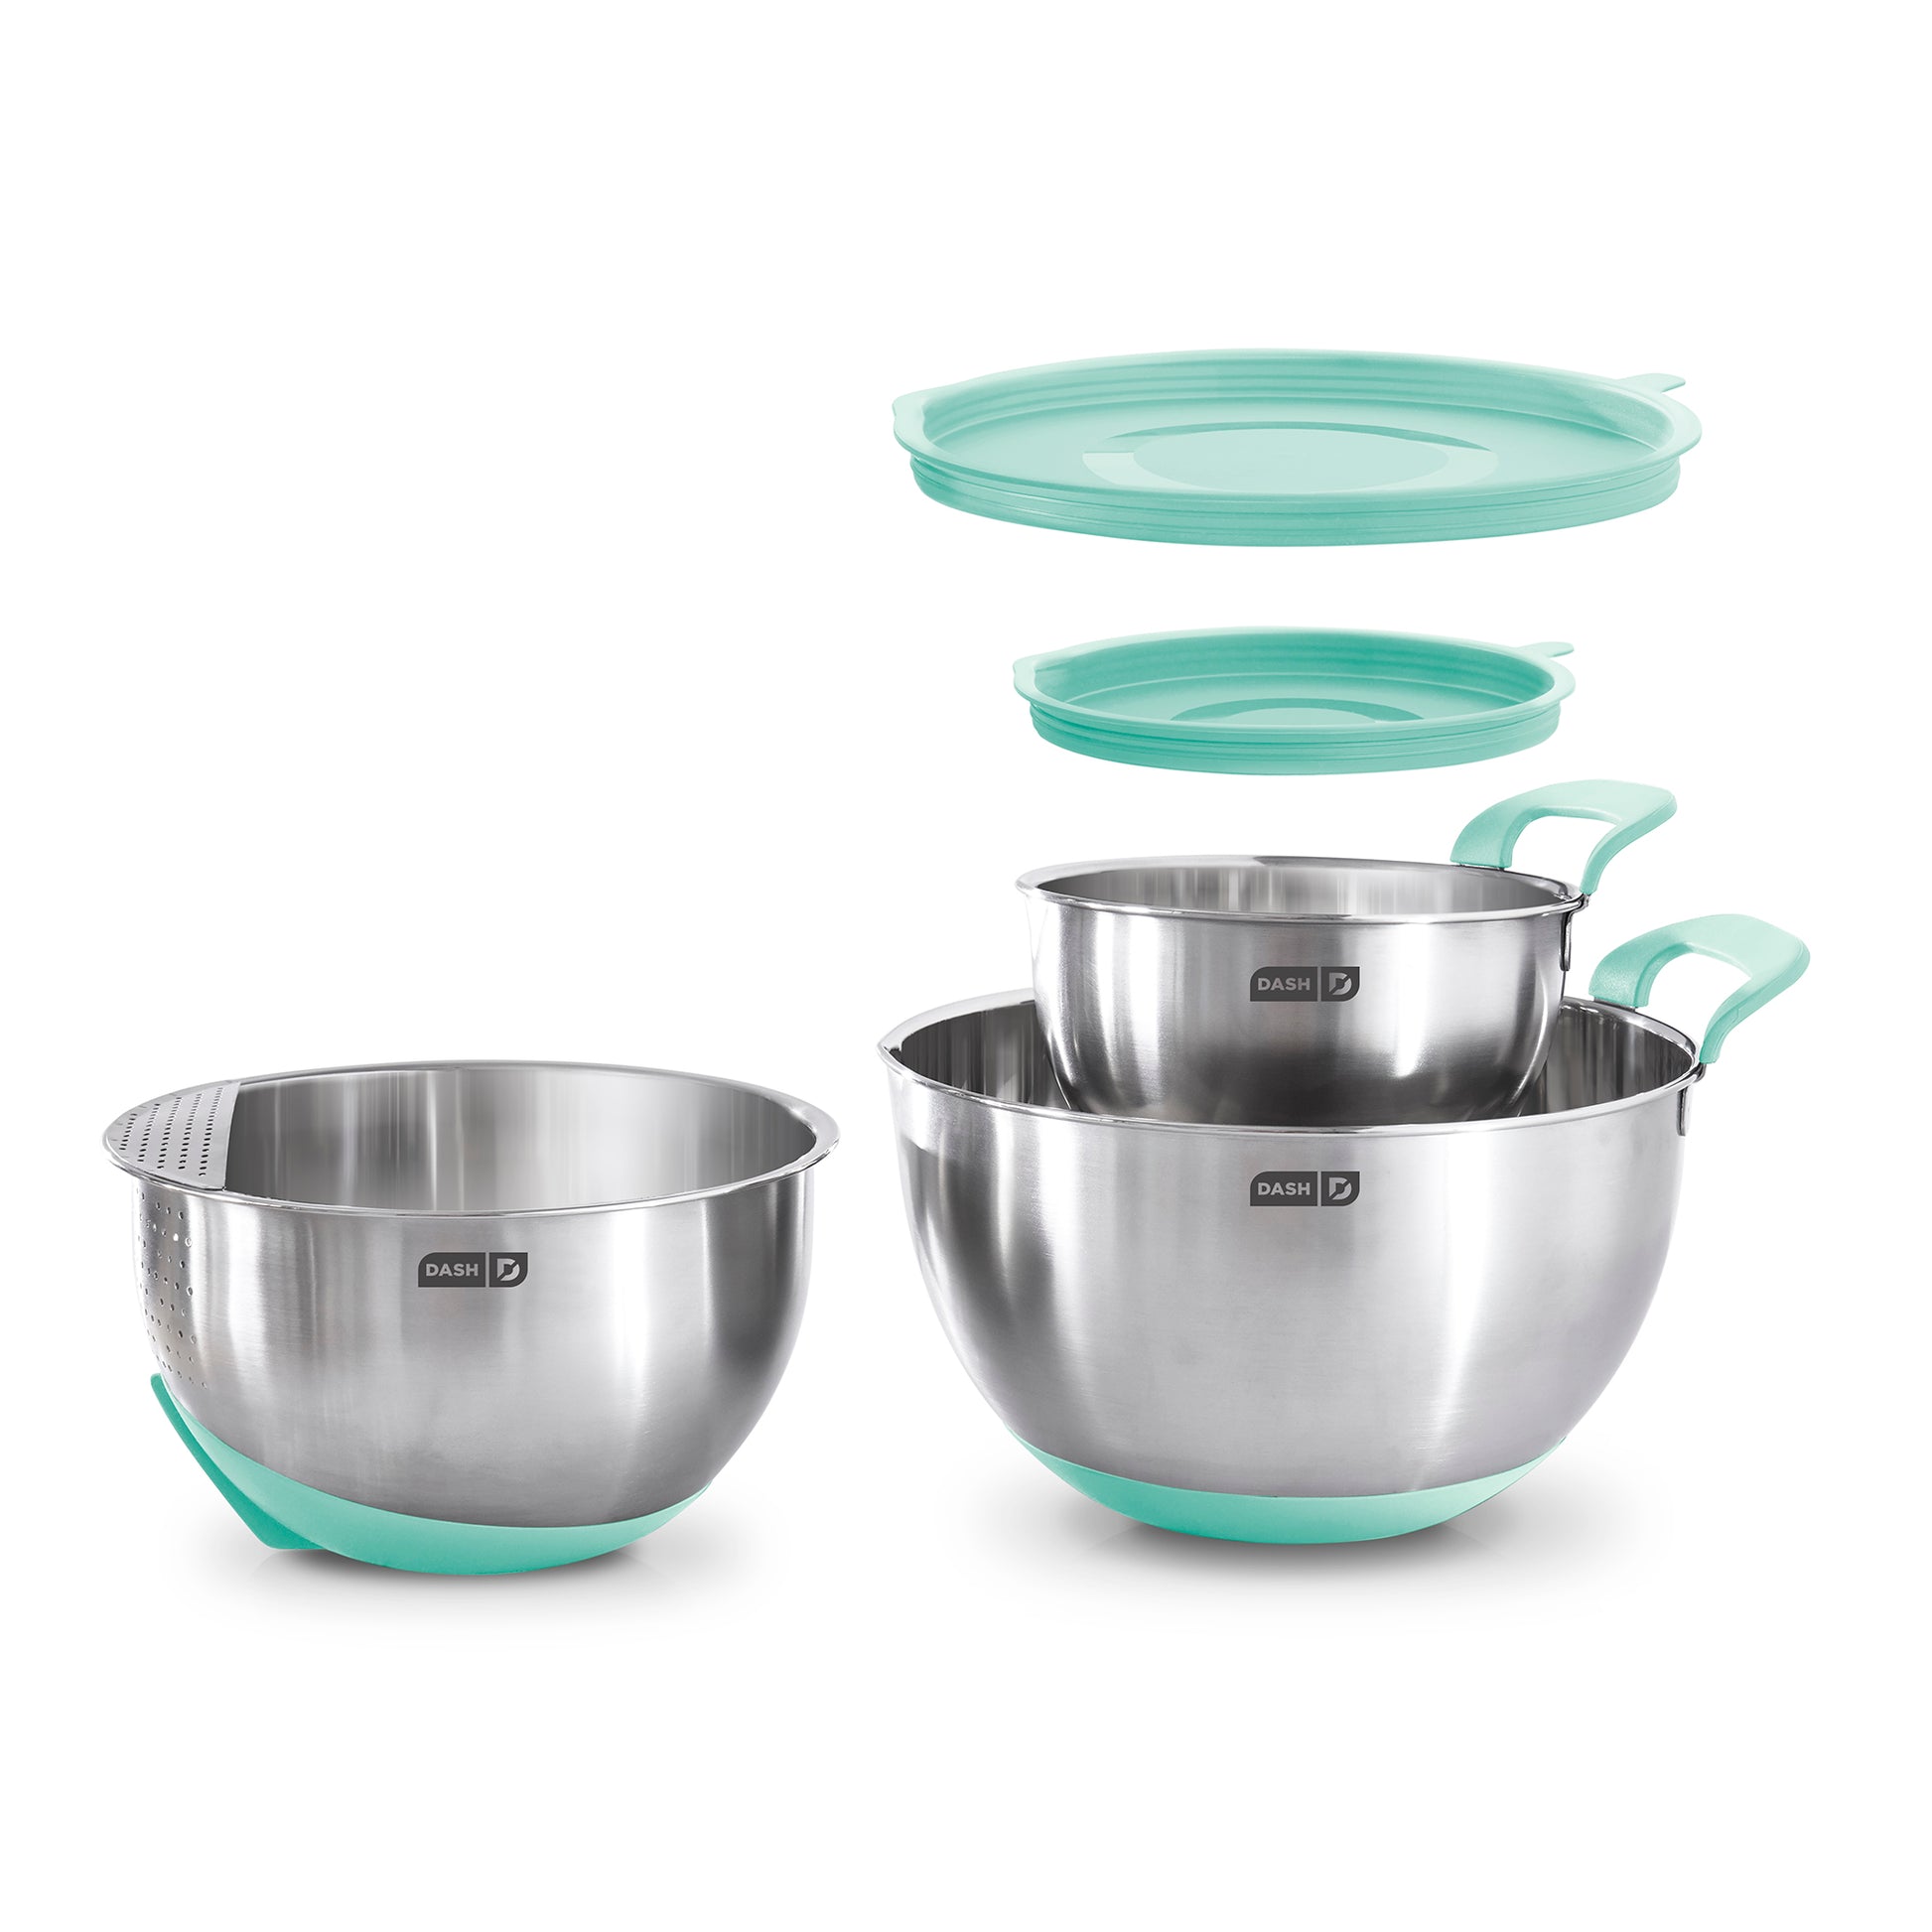 Good Cook Multi-Purpose Mixing Bowl, Plastic, Assorted Colors, 7-Qt.